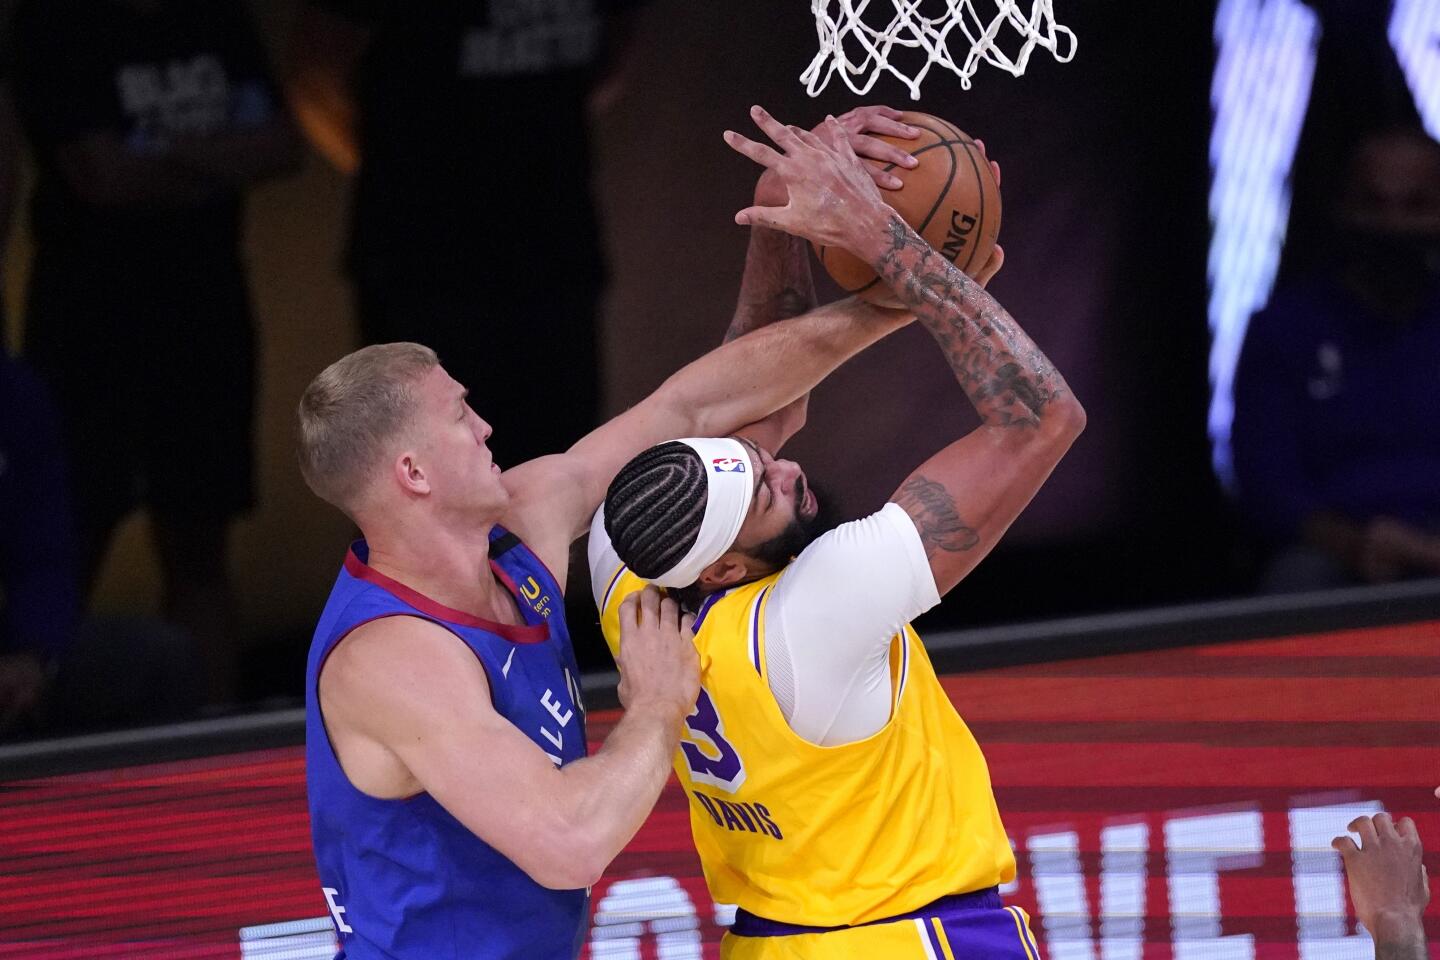 Nuggets center Mason Plumlee fouls Lakers forward Anthony Davis during Game 1.